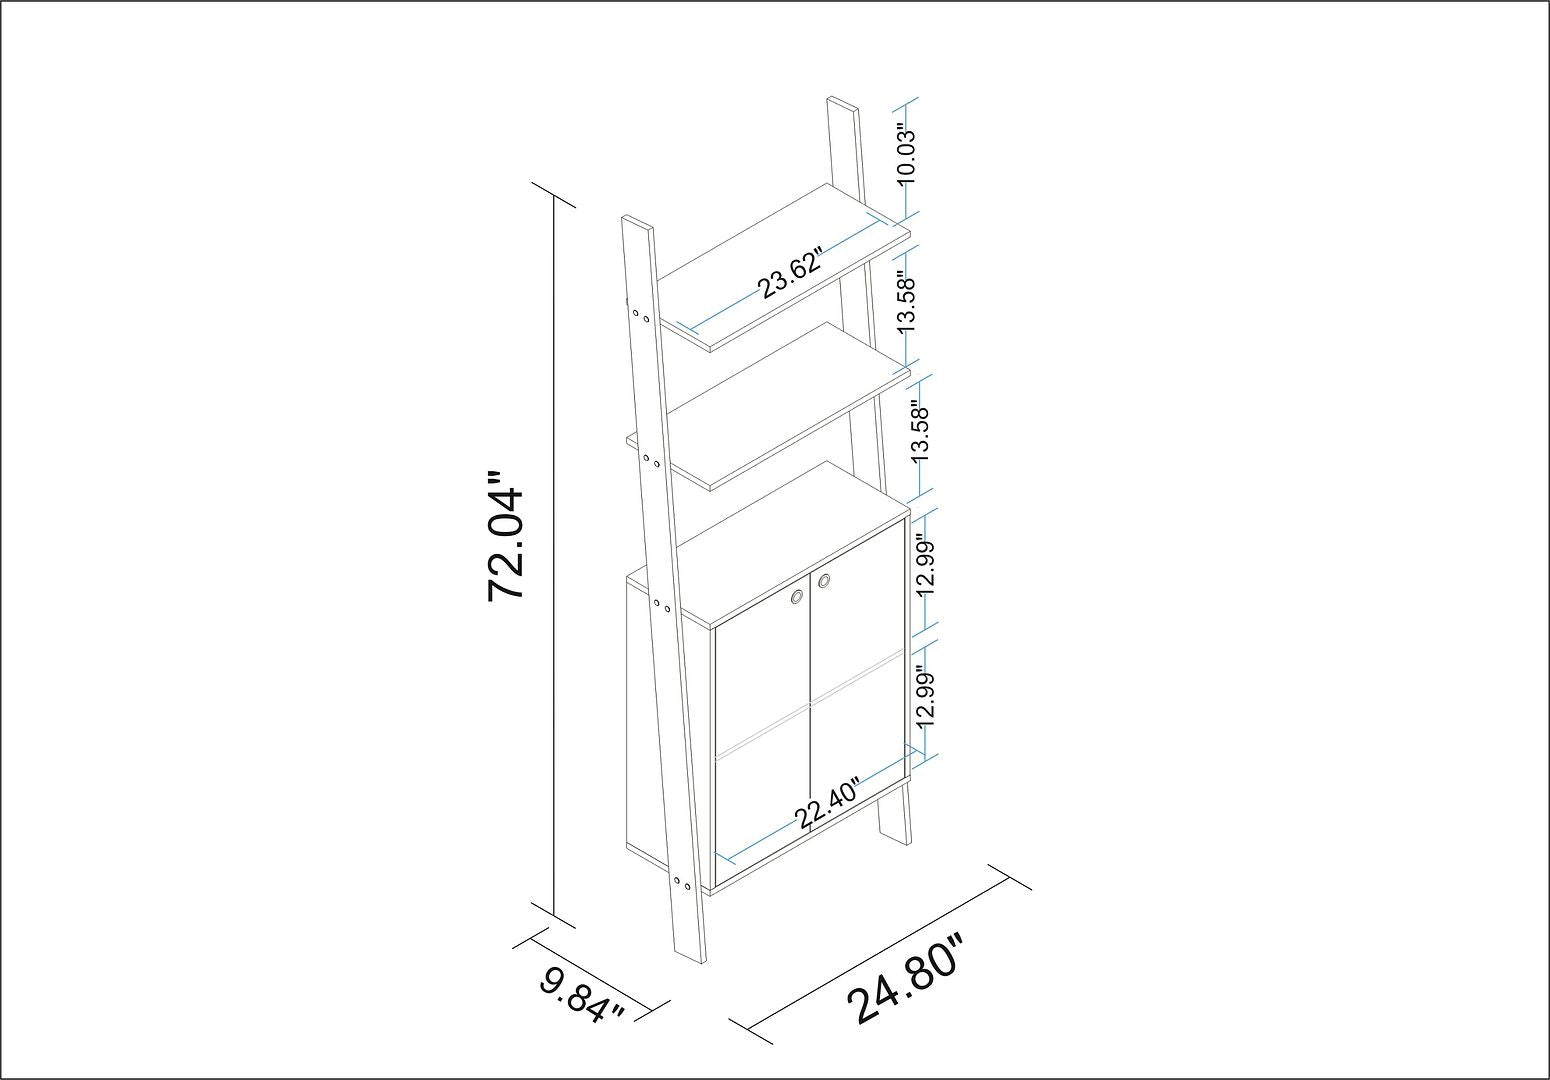 Manhattan Comfort Cooper Ladder Display Cabinet With 2 Floating Shelves In Black